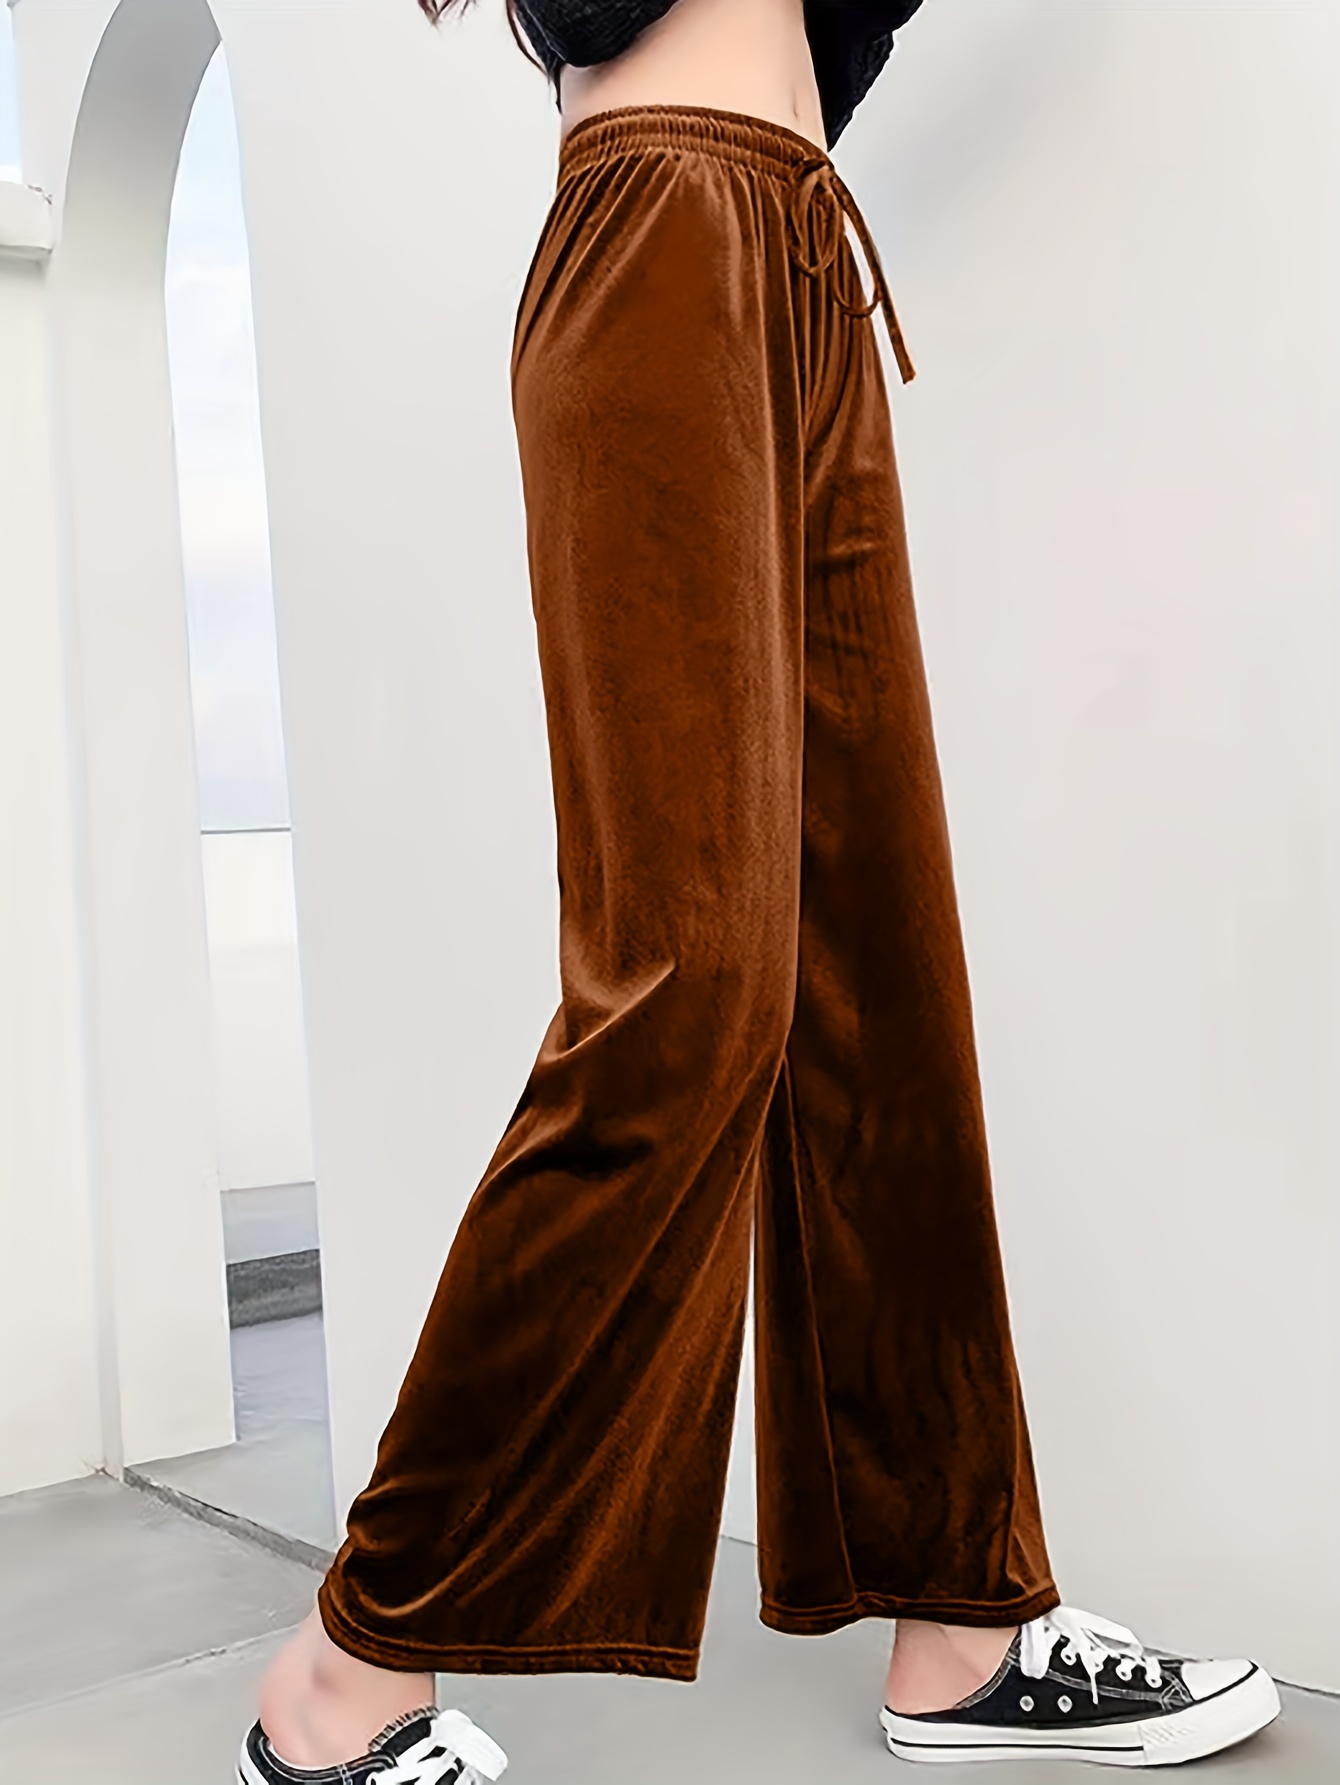  XIALON Dresses for Women - Wide Leg Velvet Pants (Color :  Coffee Brown, Size : Medium) : Clothing, Shoes & Jewelry